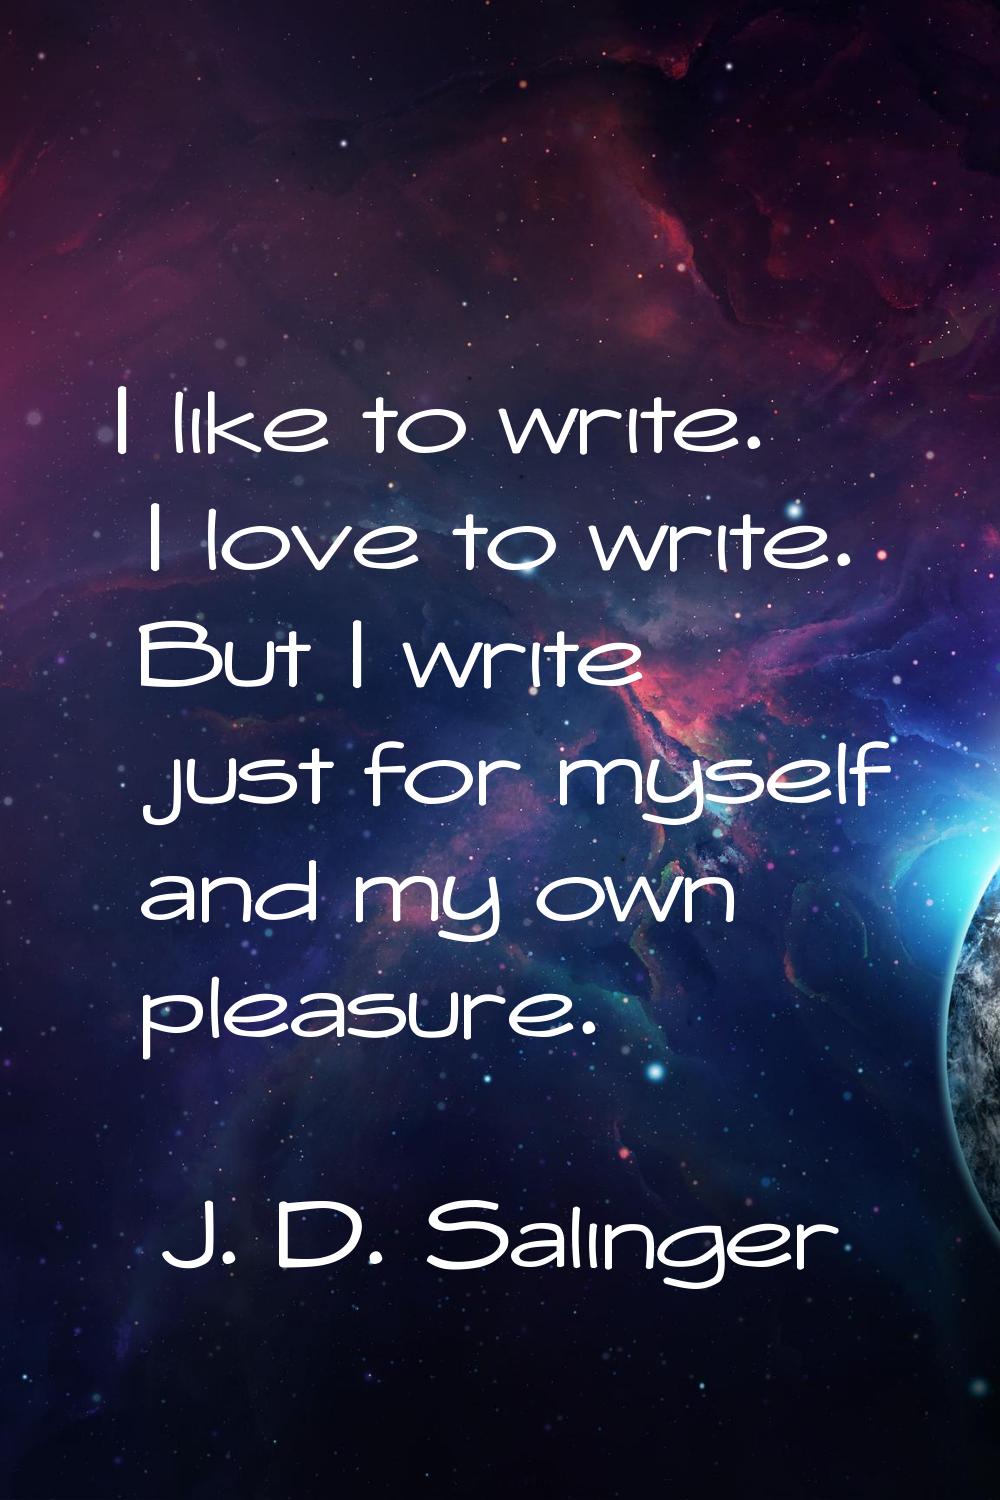 I like to write. I love to write. But I write just for myself and my own pleasure.